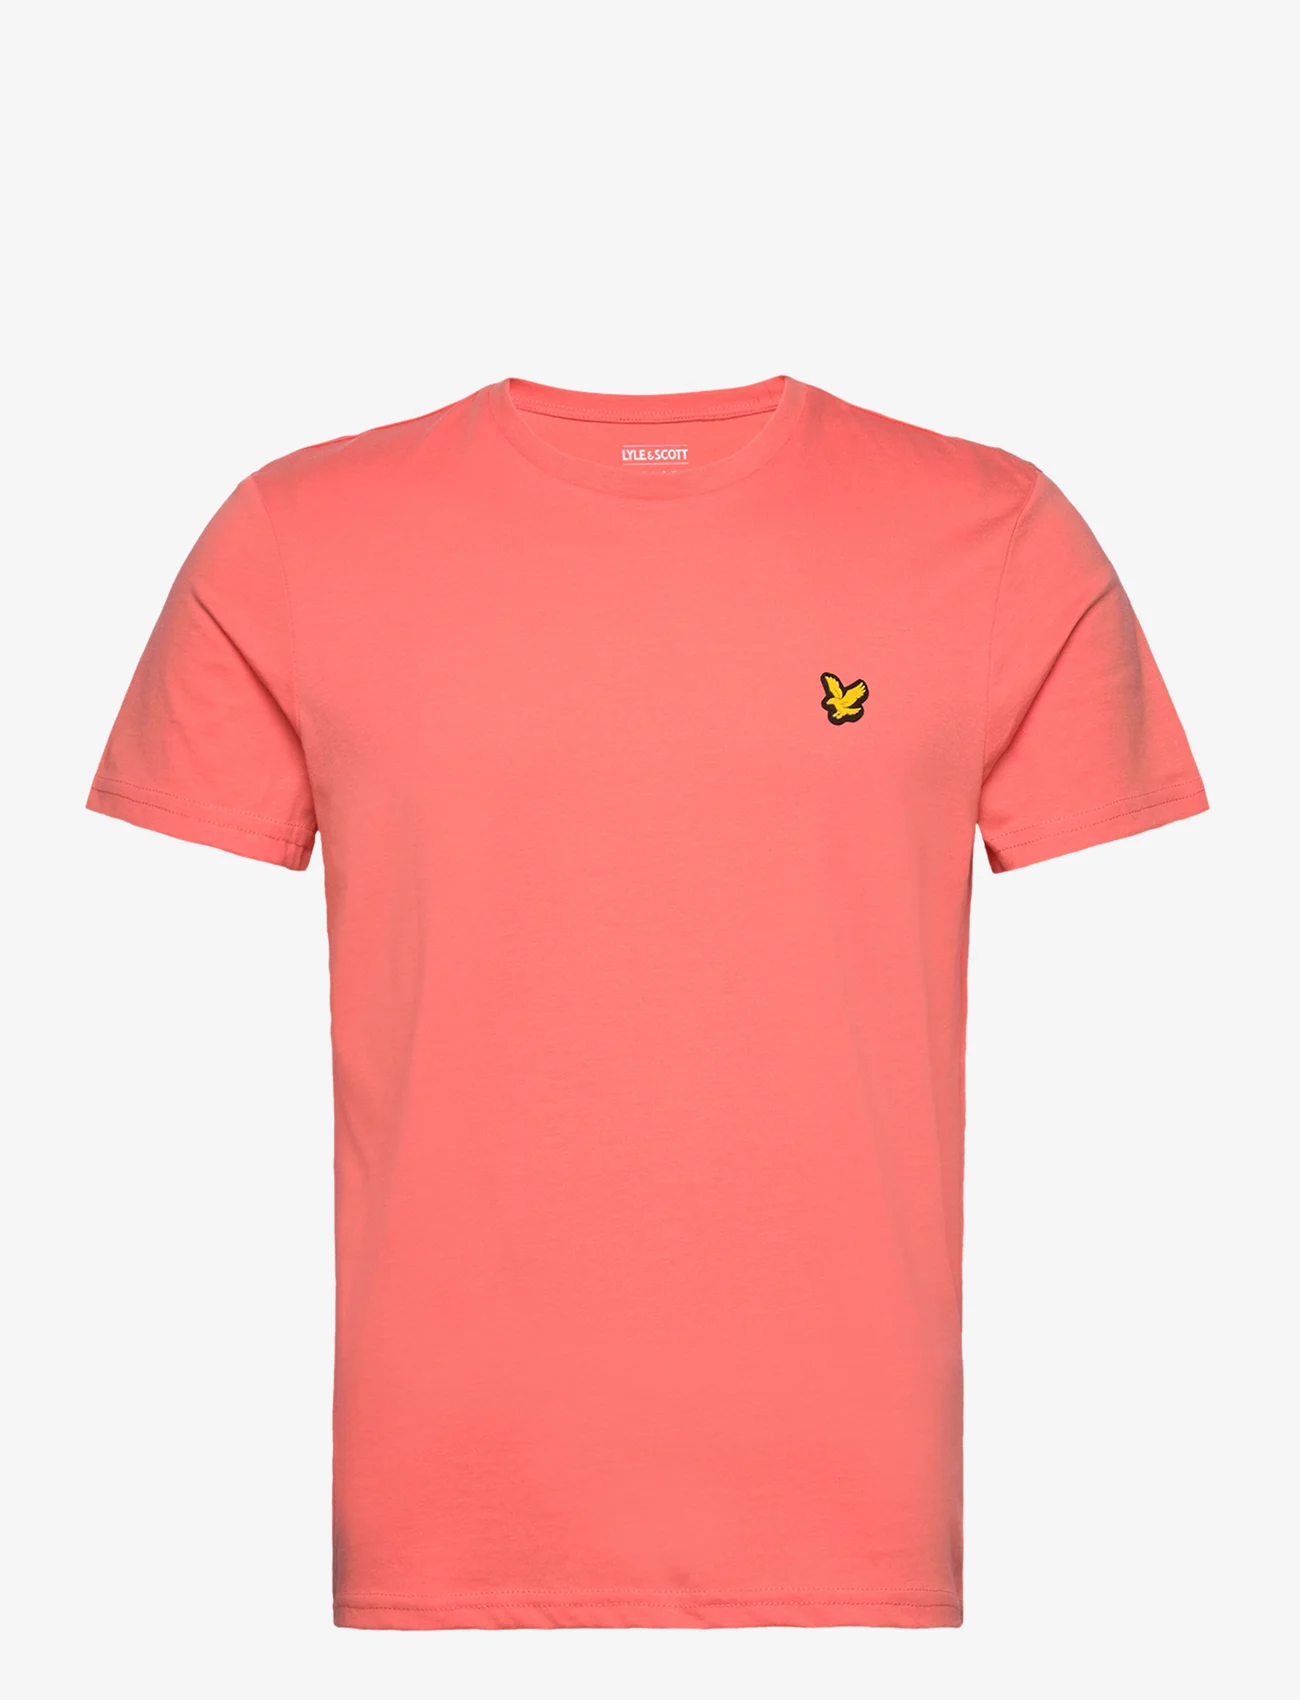 Lyle & Scott Sport - Martin SS T-Shirt - short-sleeved t-shirts - w973 course coral - 0